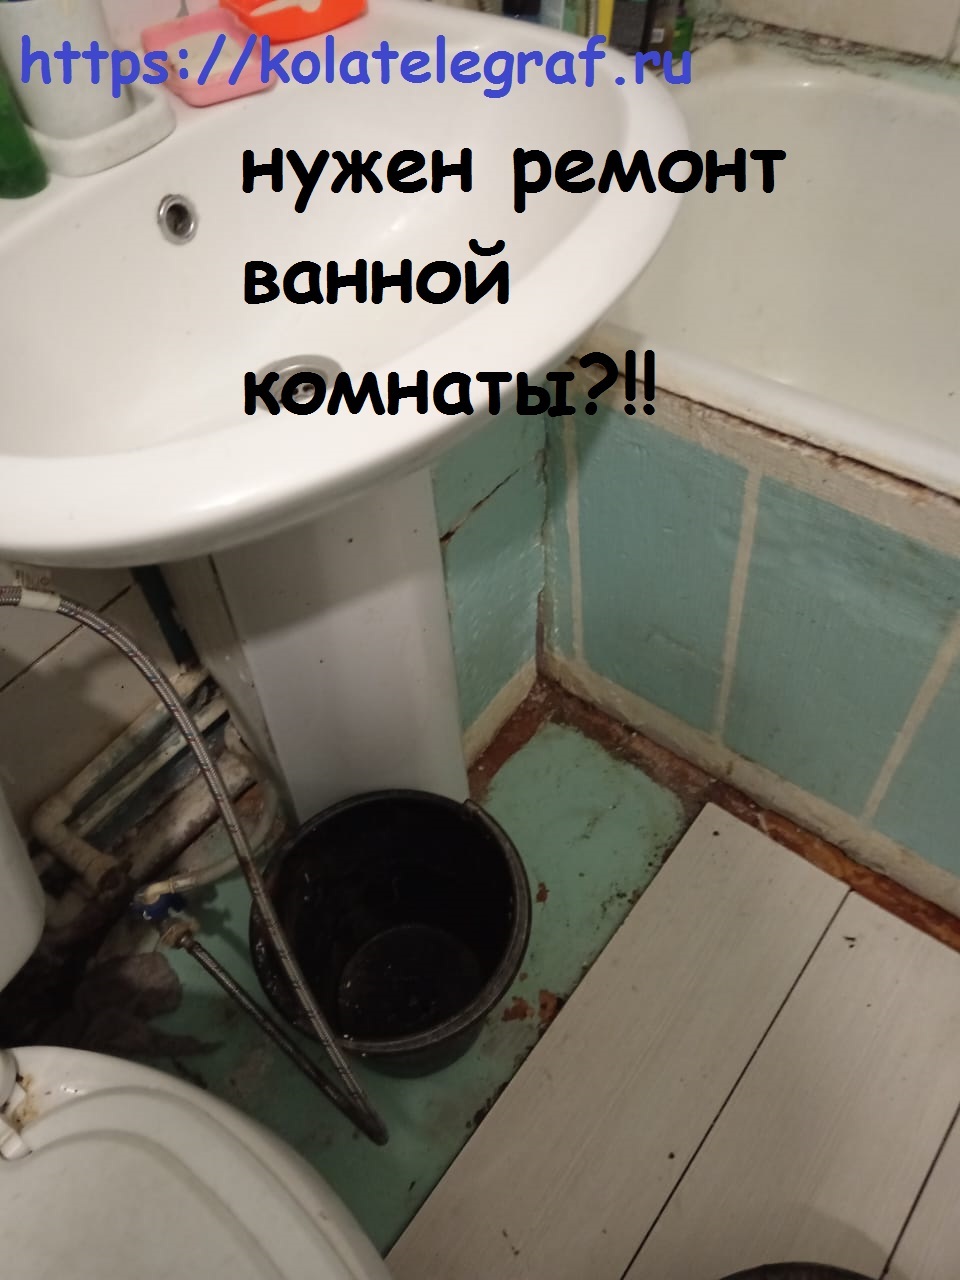 Bathroom in Khabarovsk